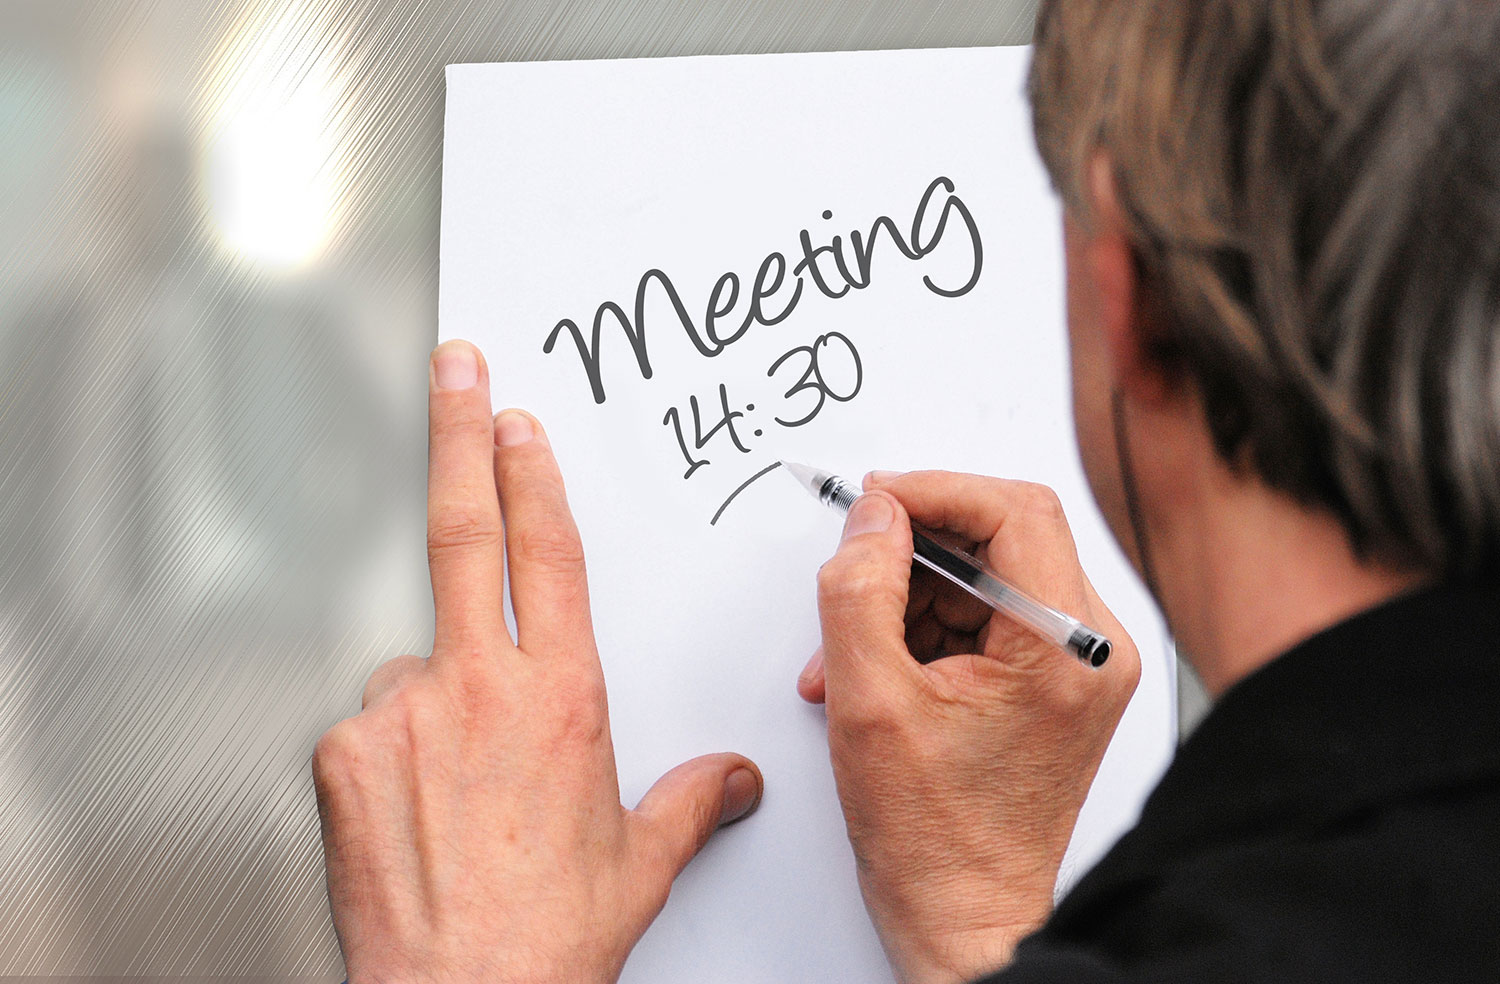 Meeting Management - The Art of Making Meetings Work